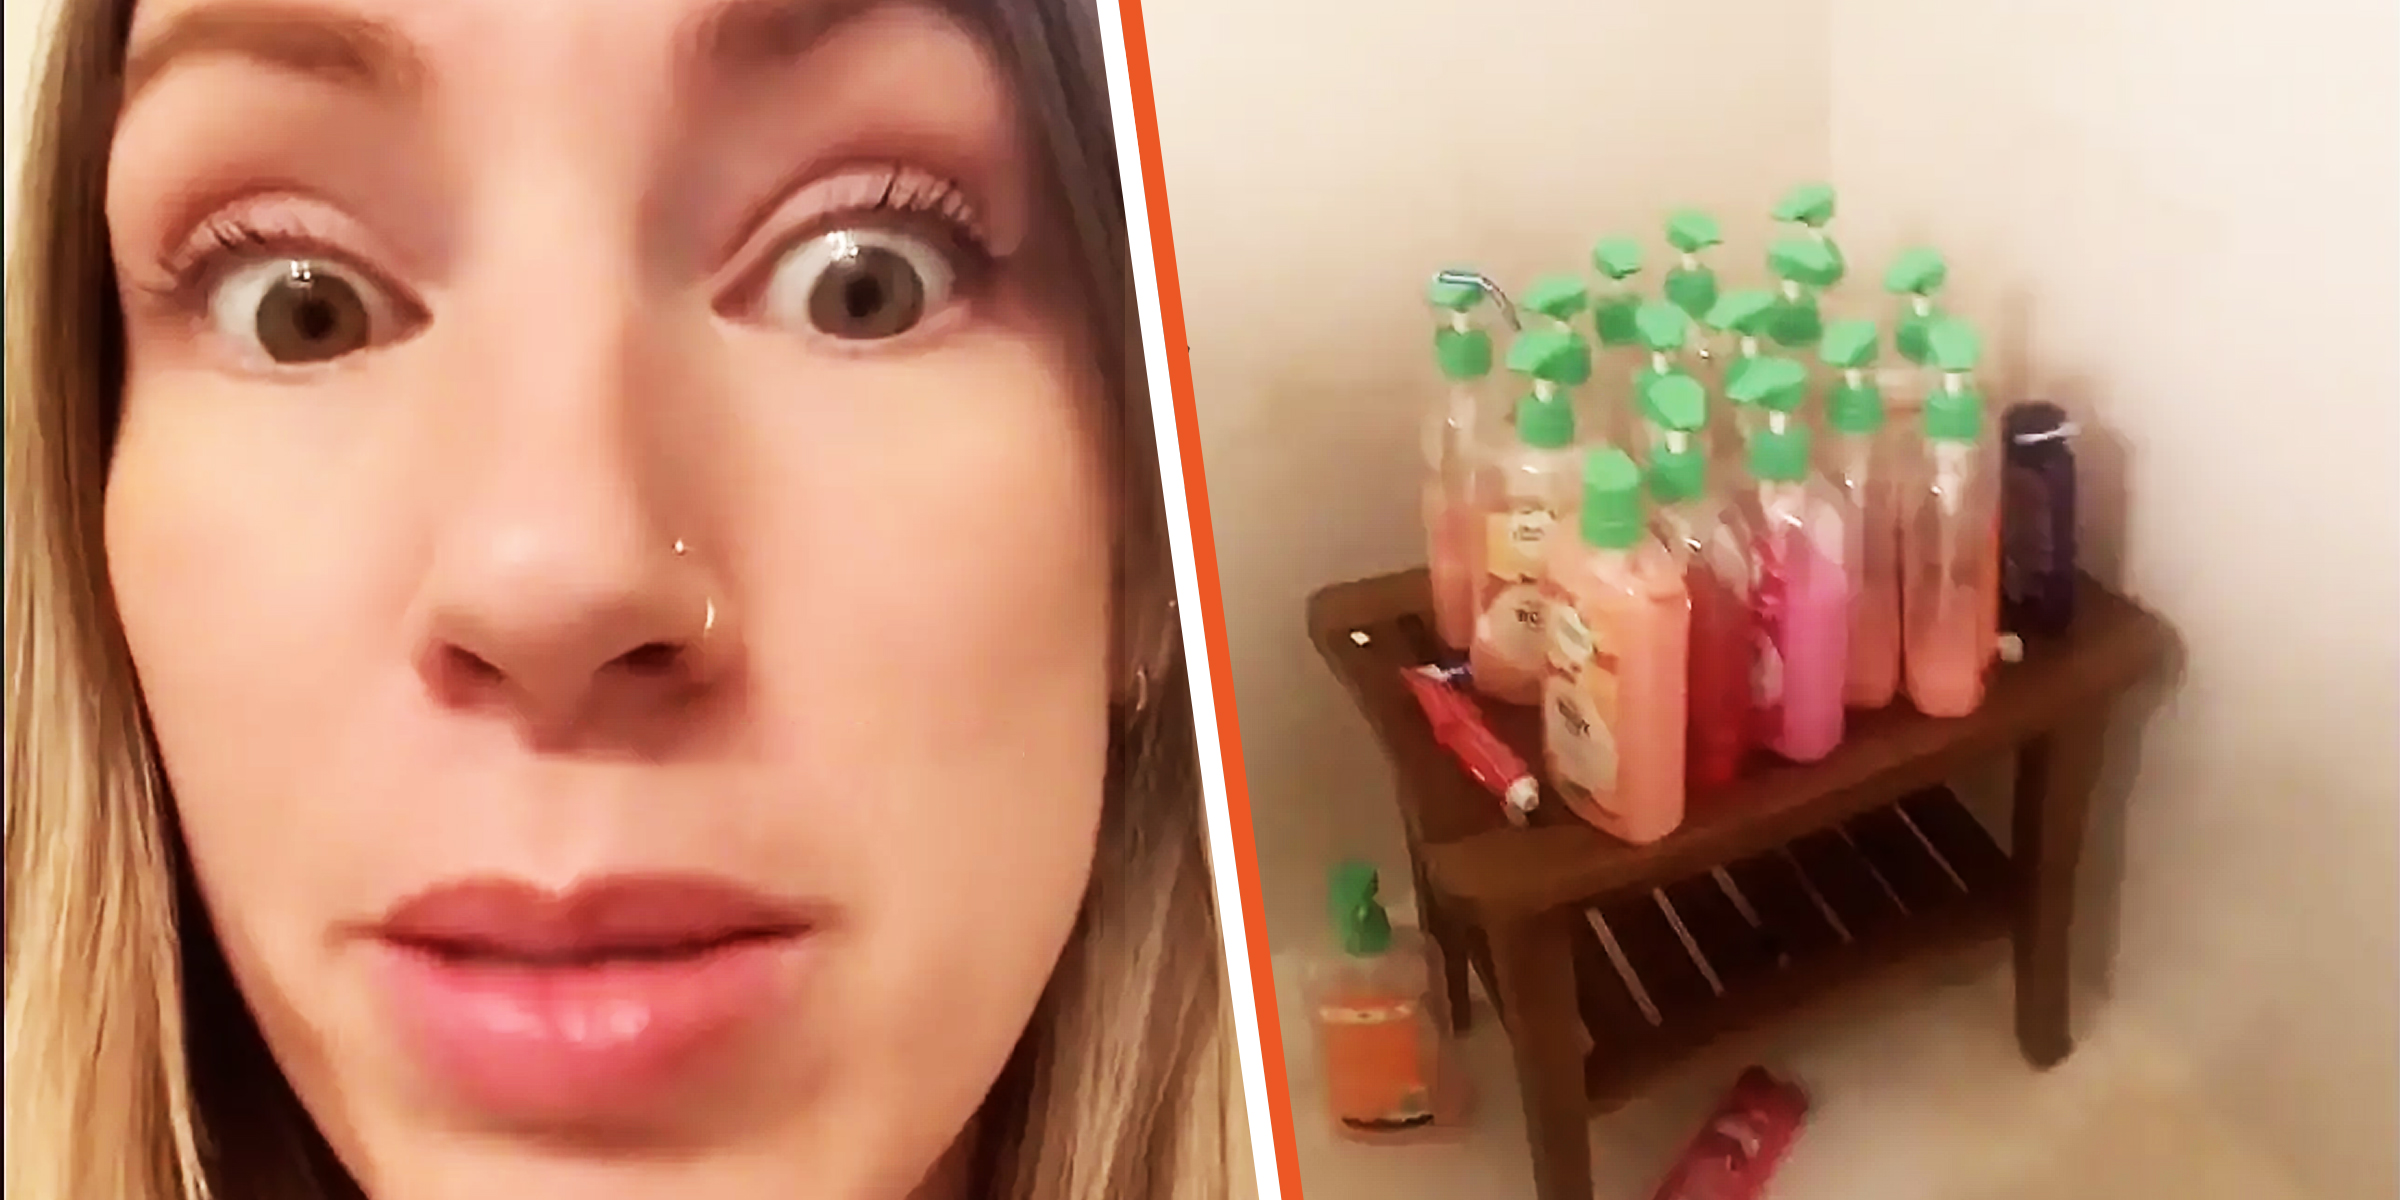 Woman horrified after finding 17 soap bottles in his bathroom. | Source: tiktok.com/missmcnallyyy